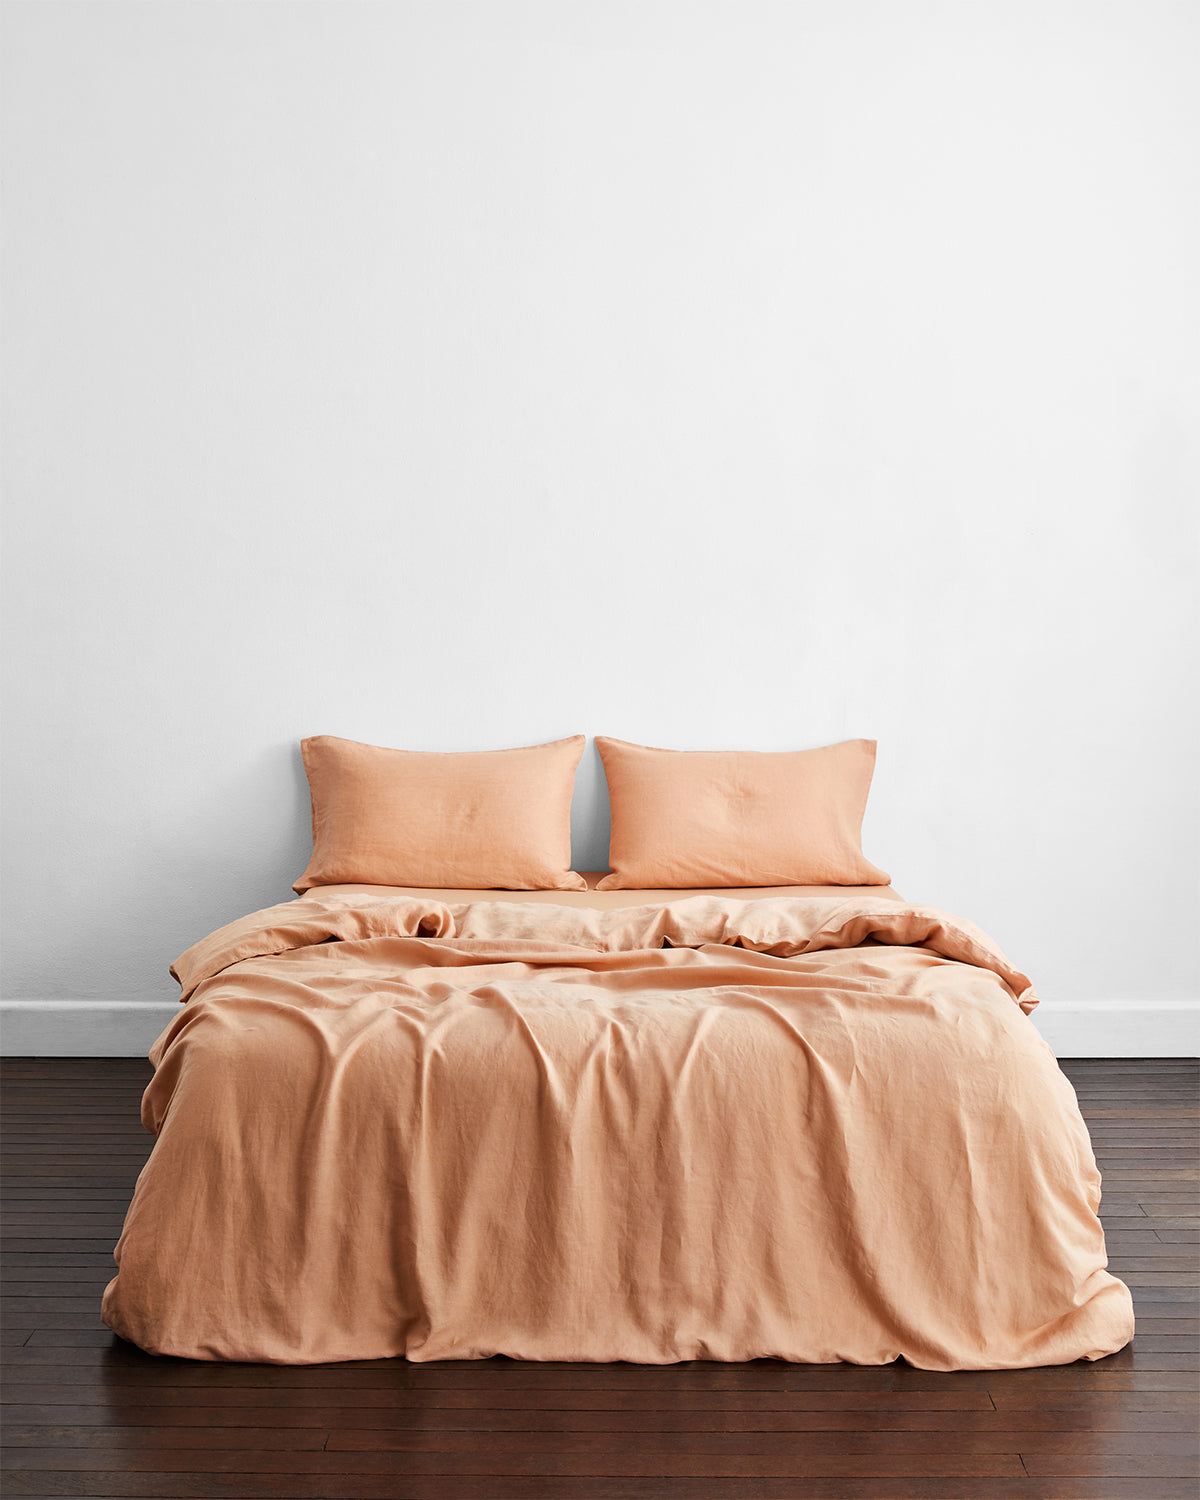 Flax Linen Bedding -  Canada